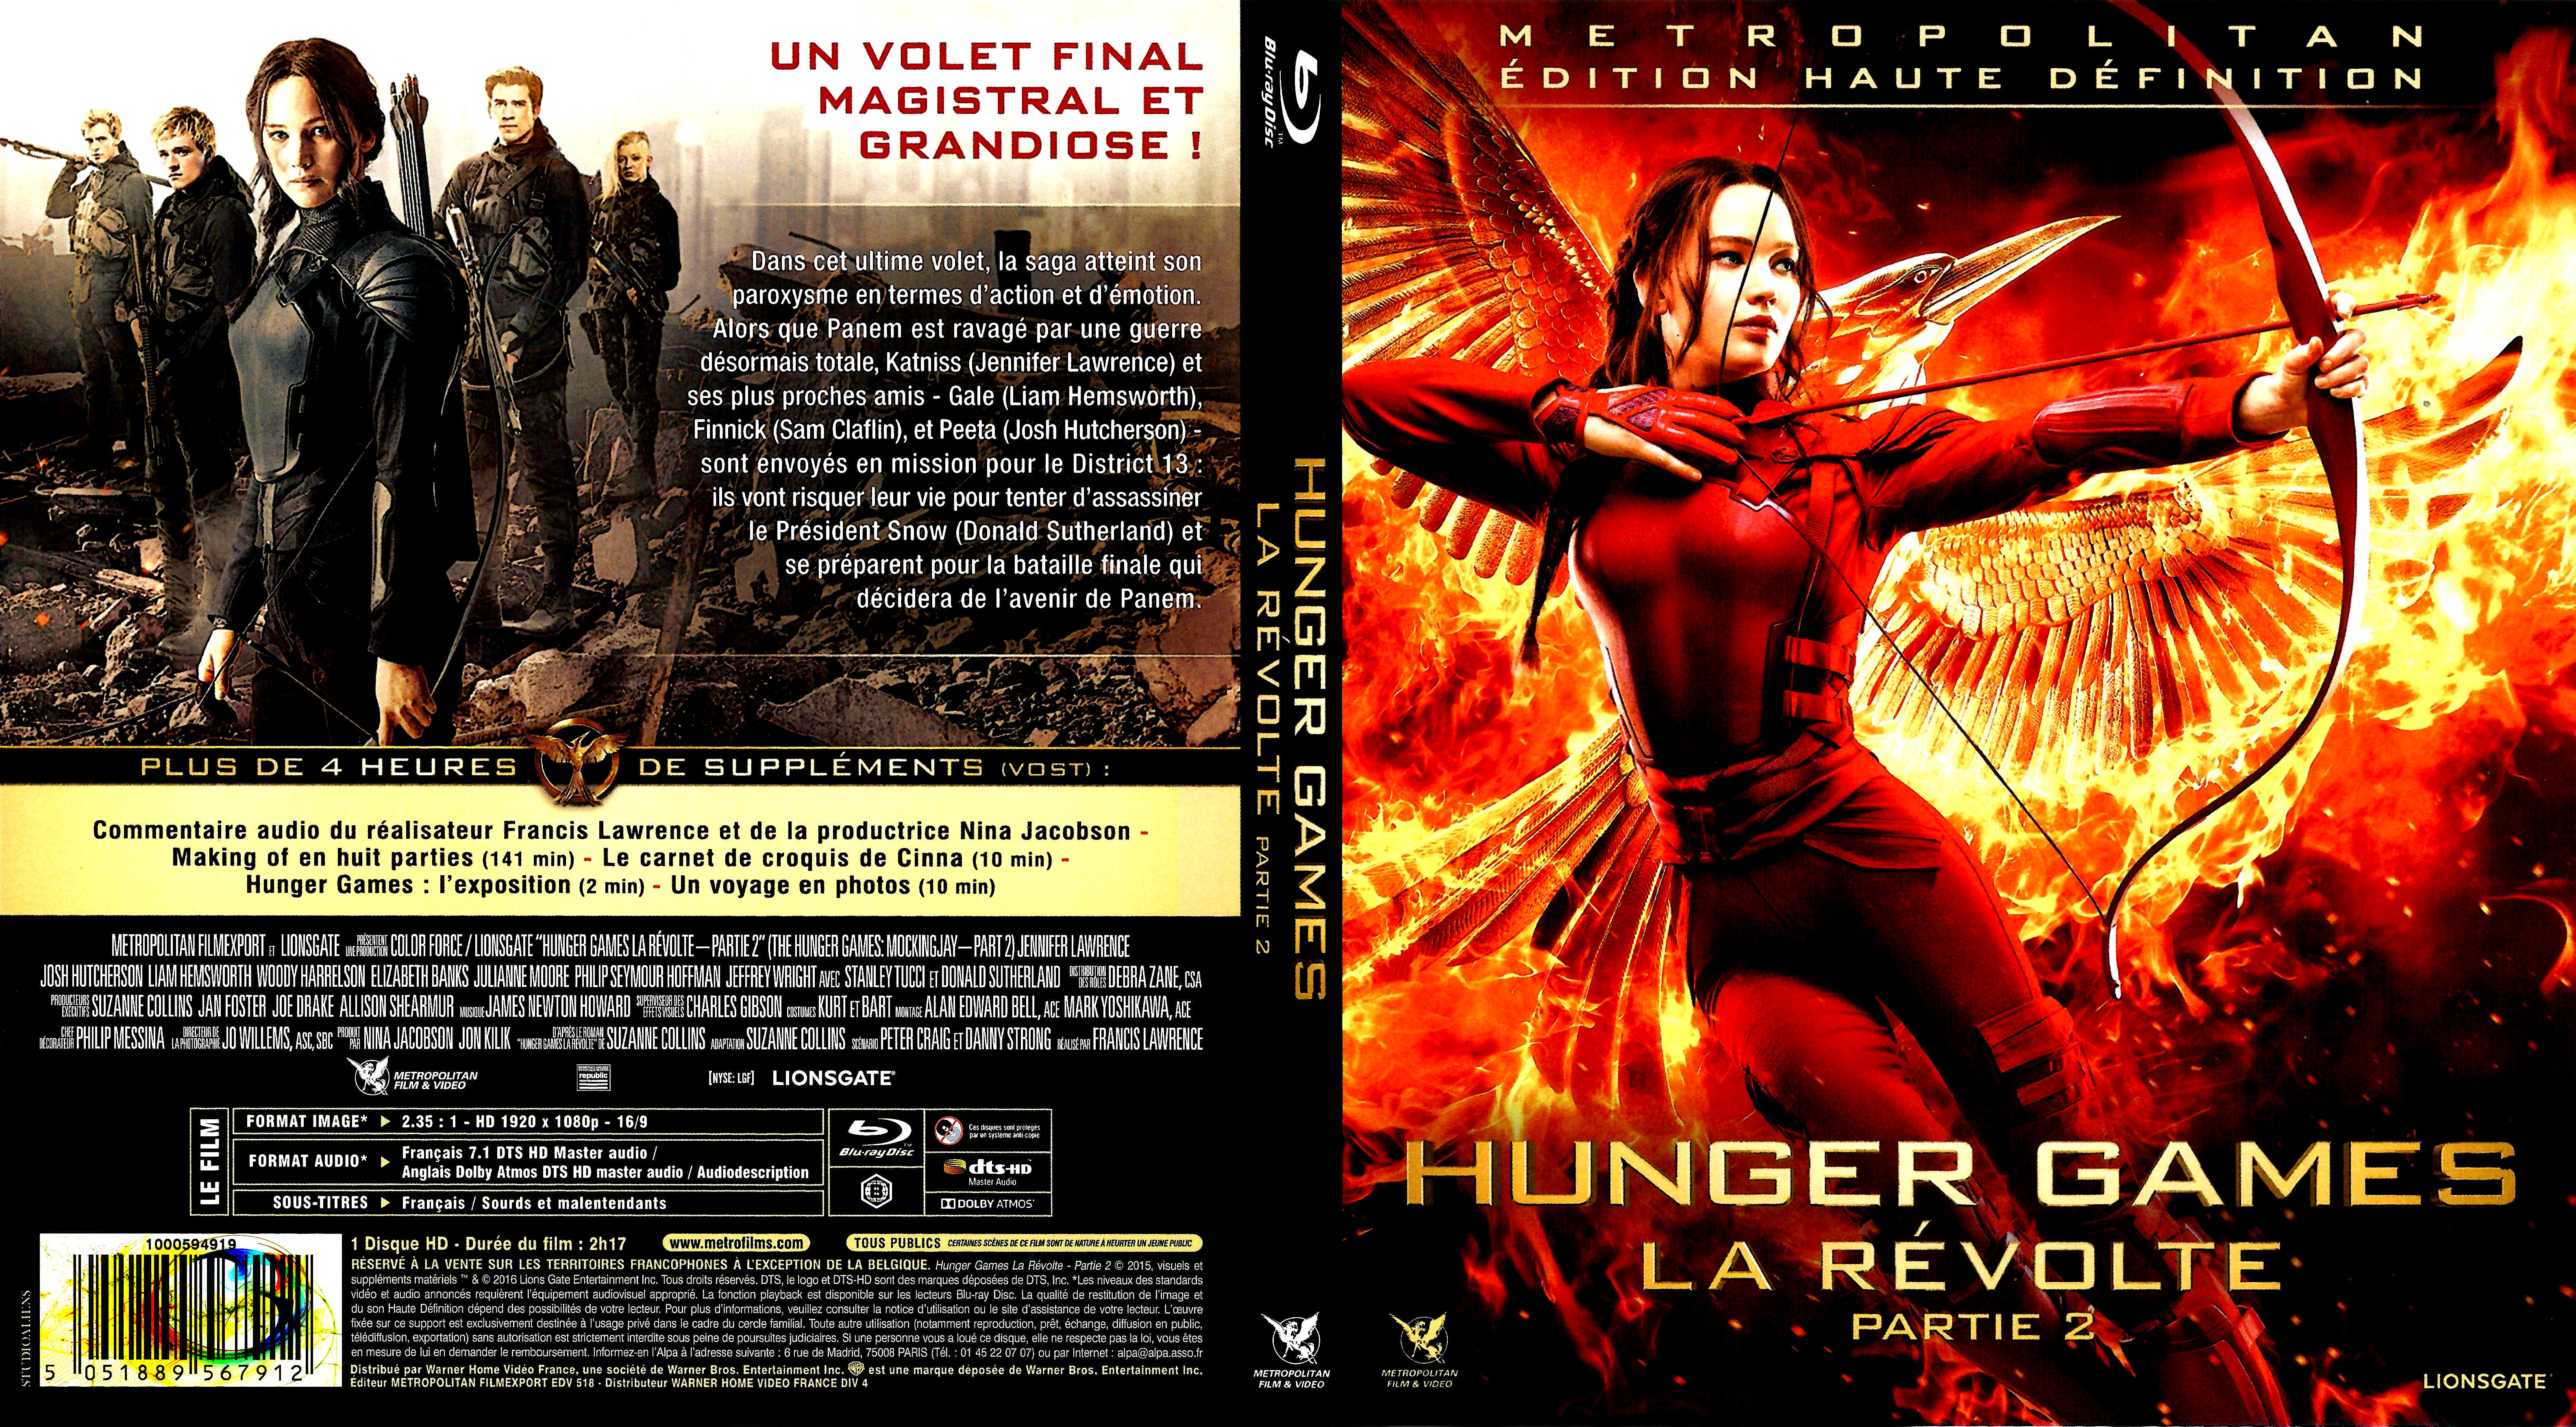 Jaquette DVD Hunger Games La Rvolte : Partie 2 (BLU-RAY)